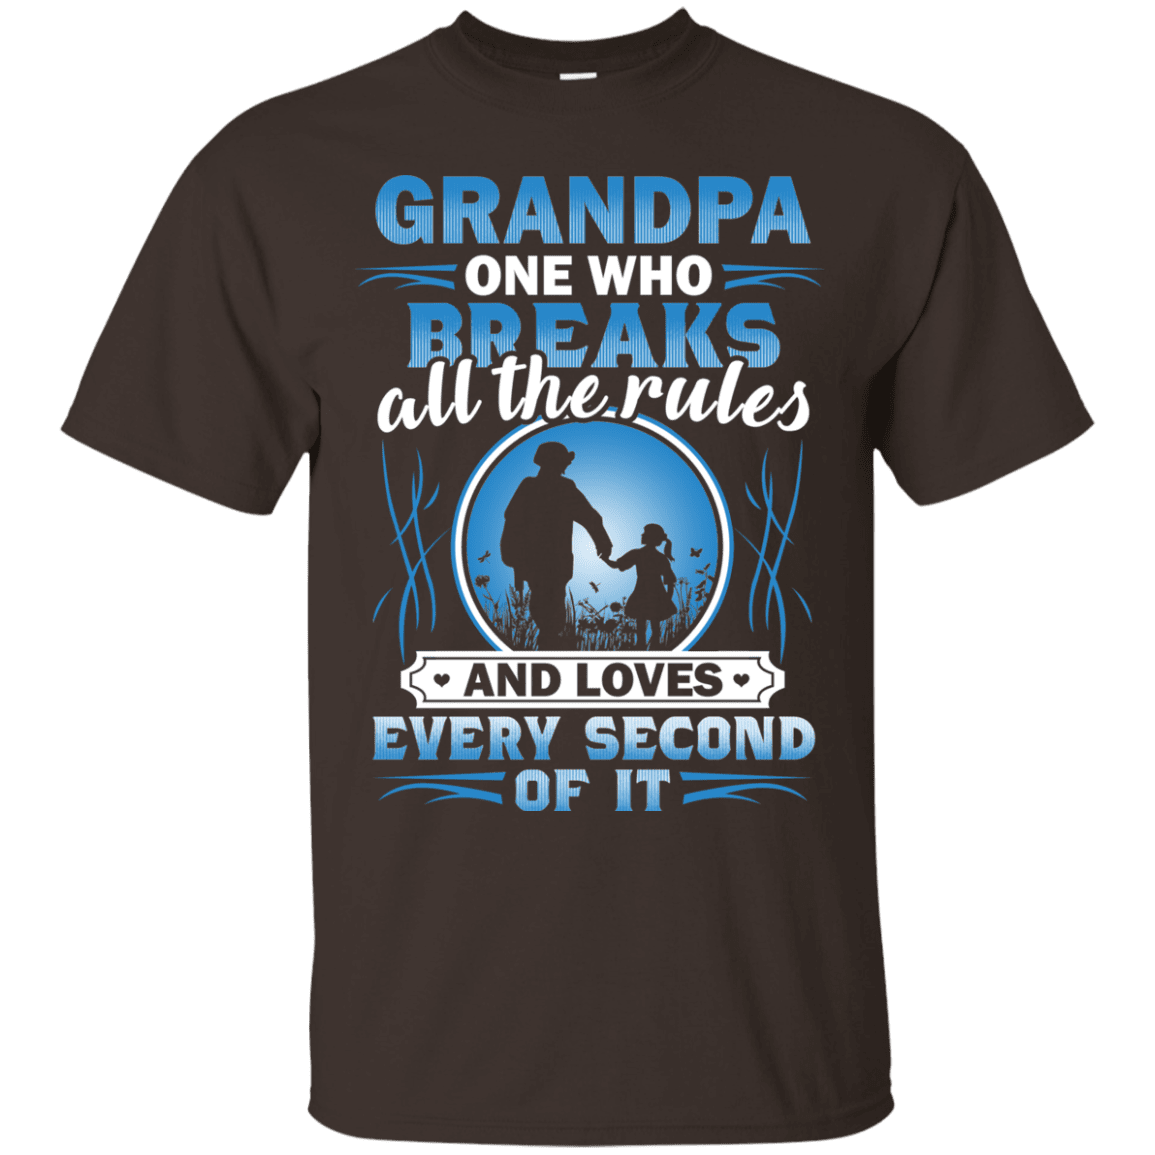 Military T-Shirt "GRANDPA ONE WHO BREAKS ALL THE RULES"-TShirt-General-Veterans Nation